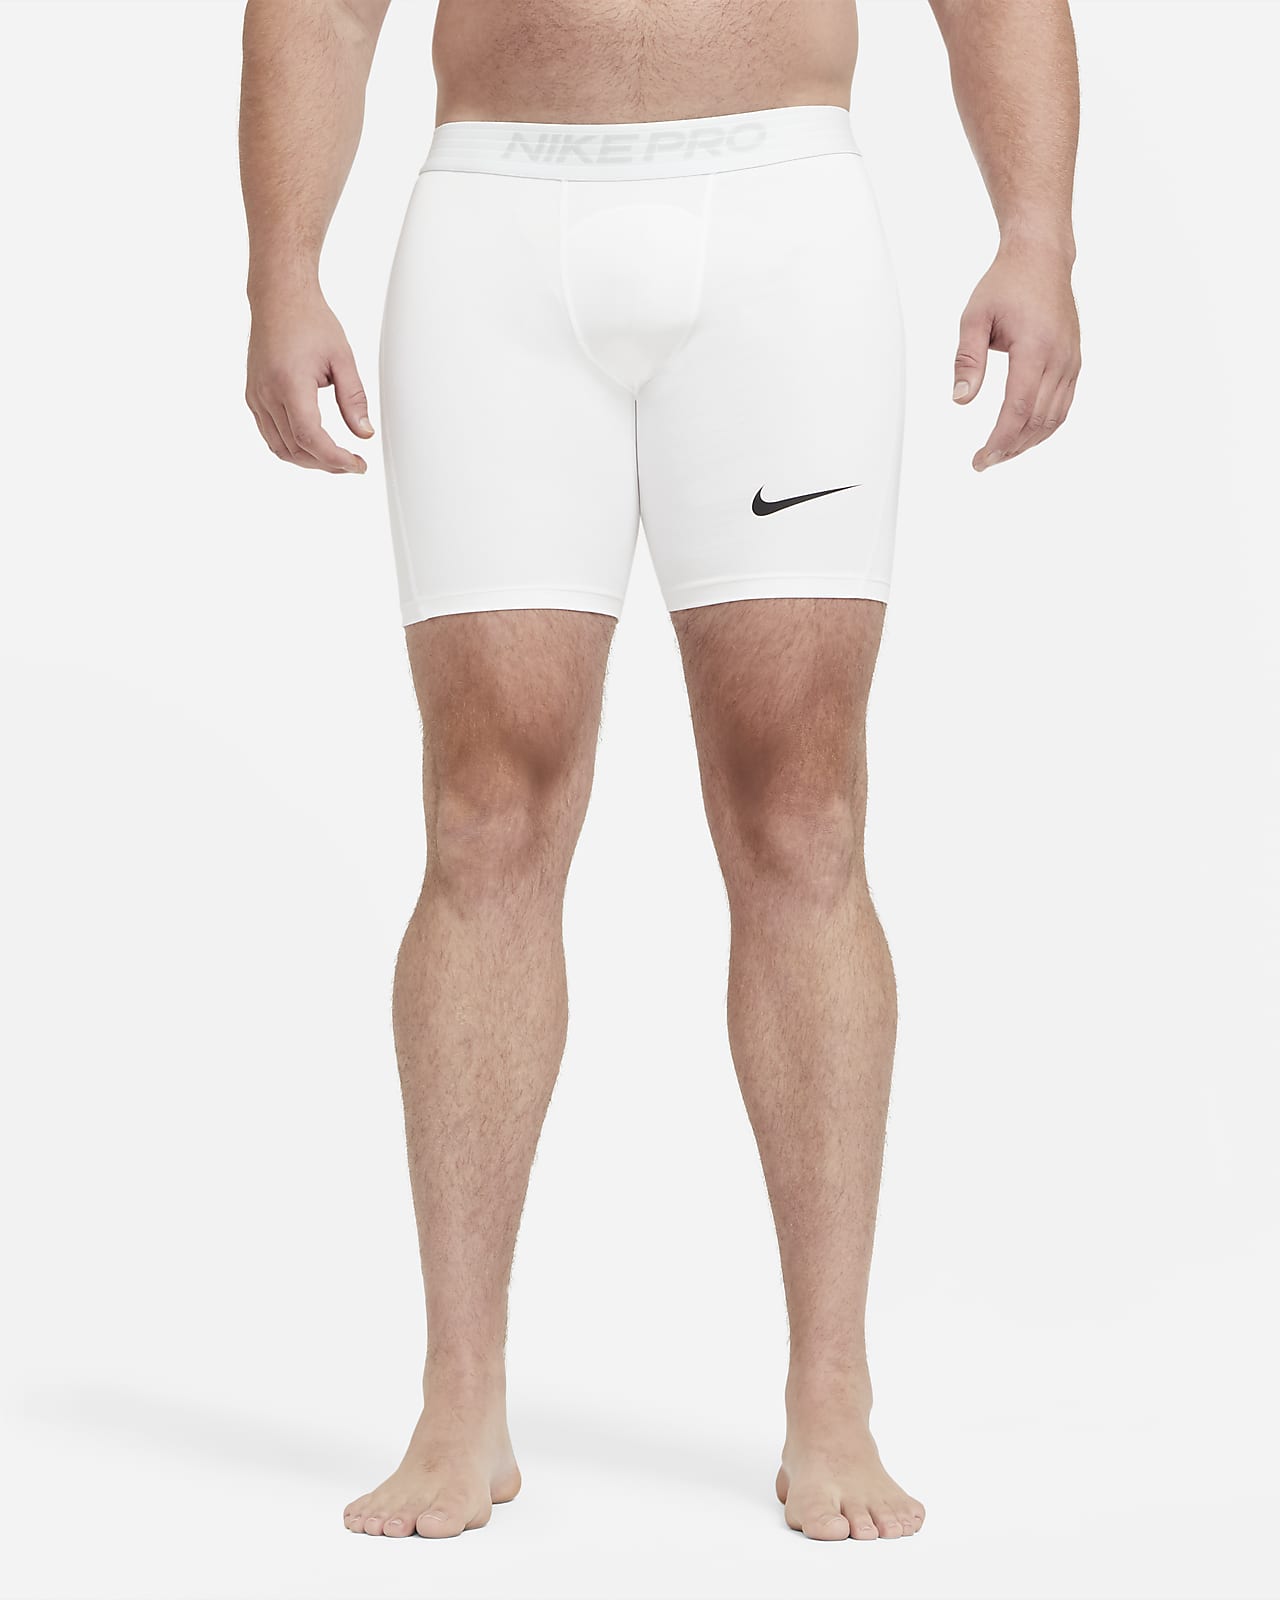 nike pro compression shorts men's size chart